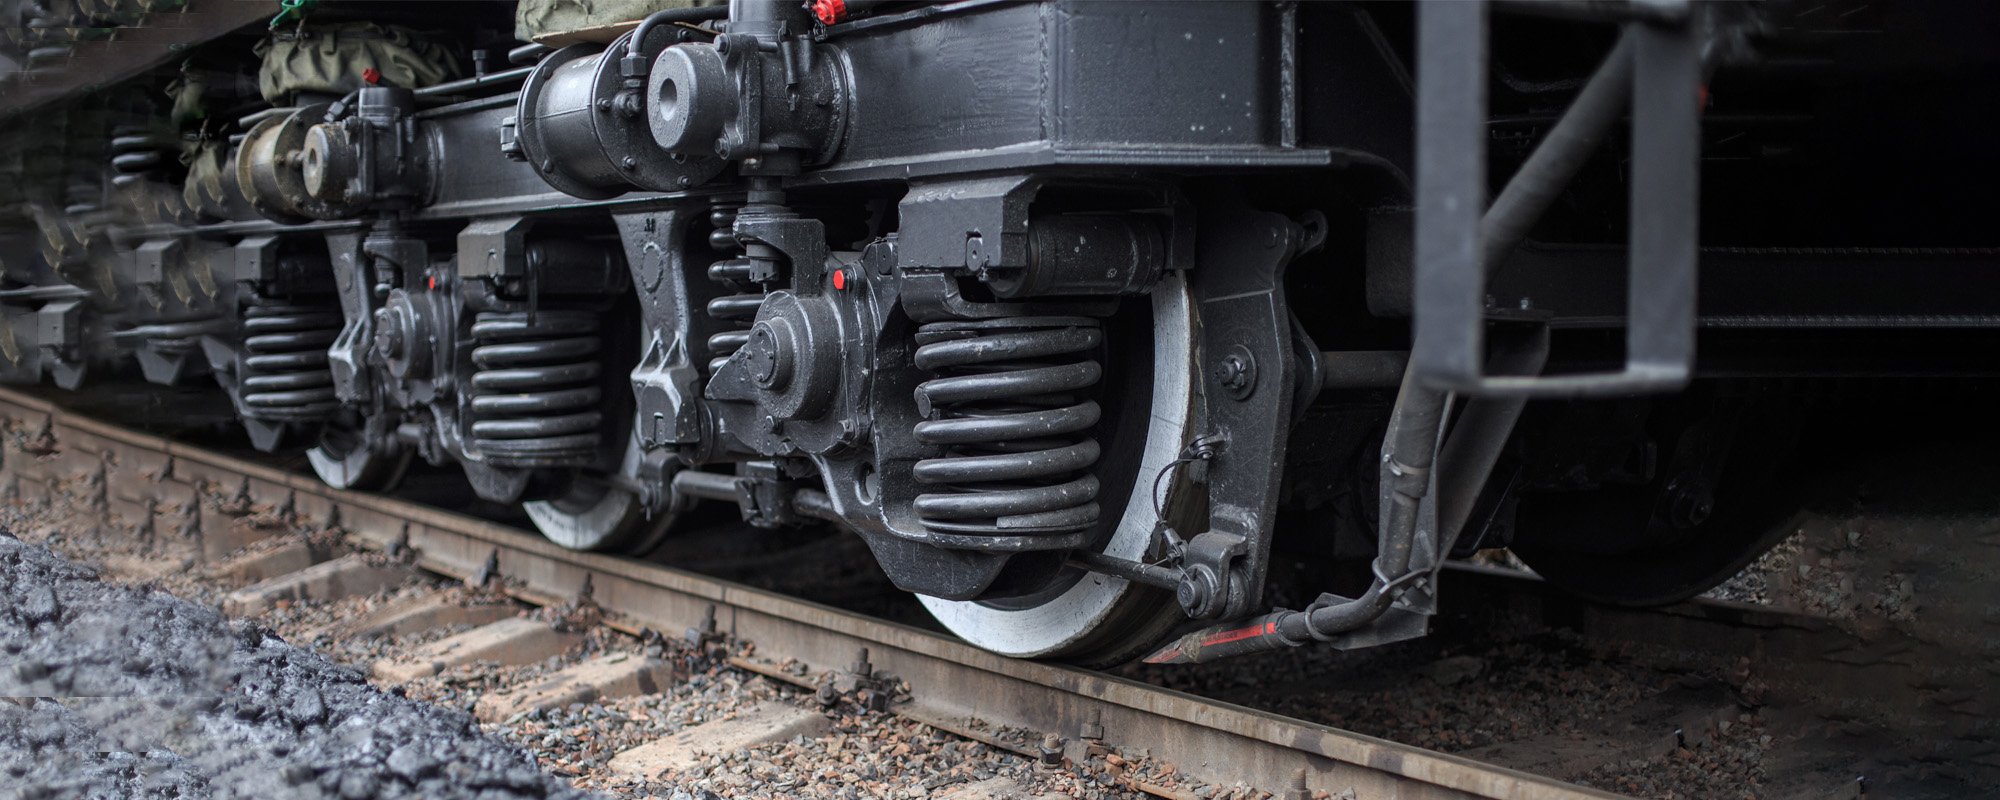 wheel mechanisms of a diesel railway locomotive